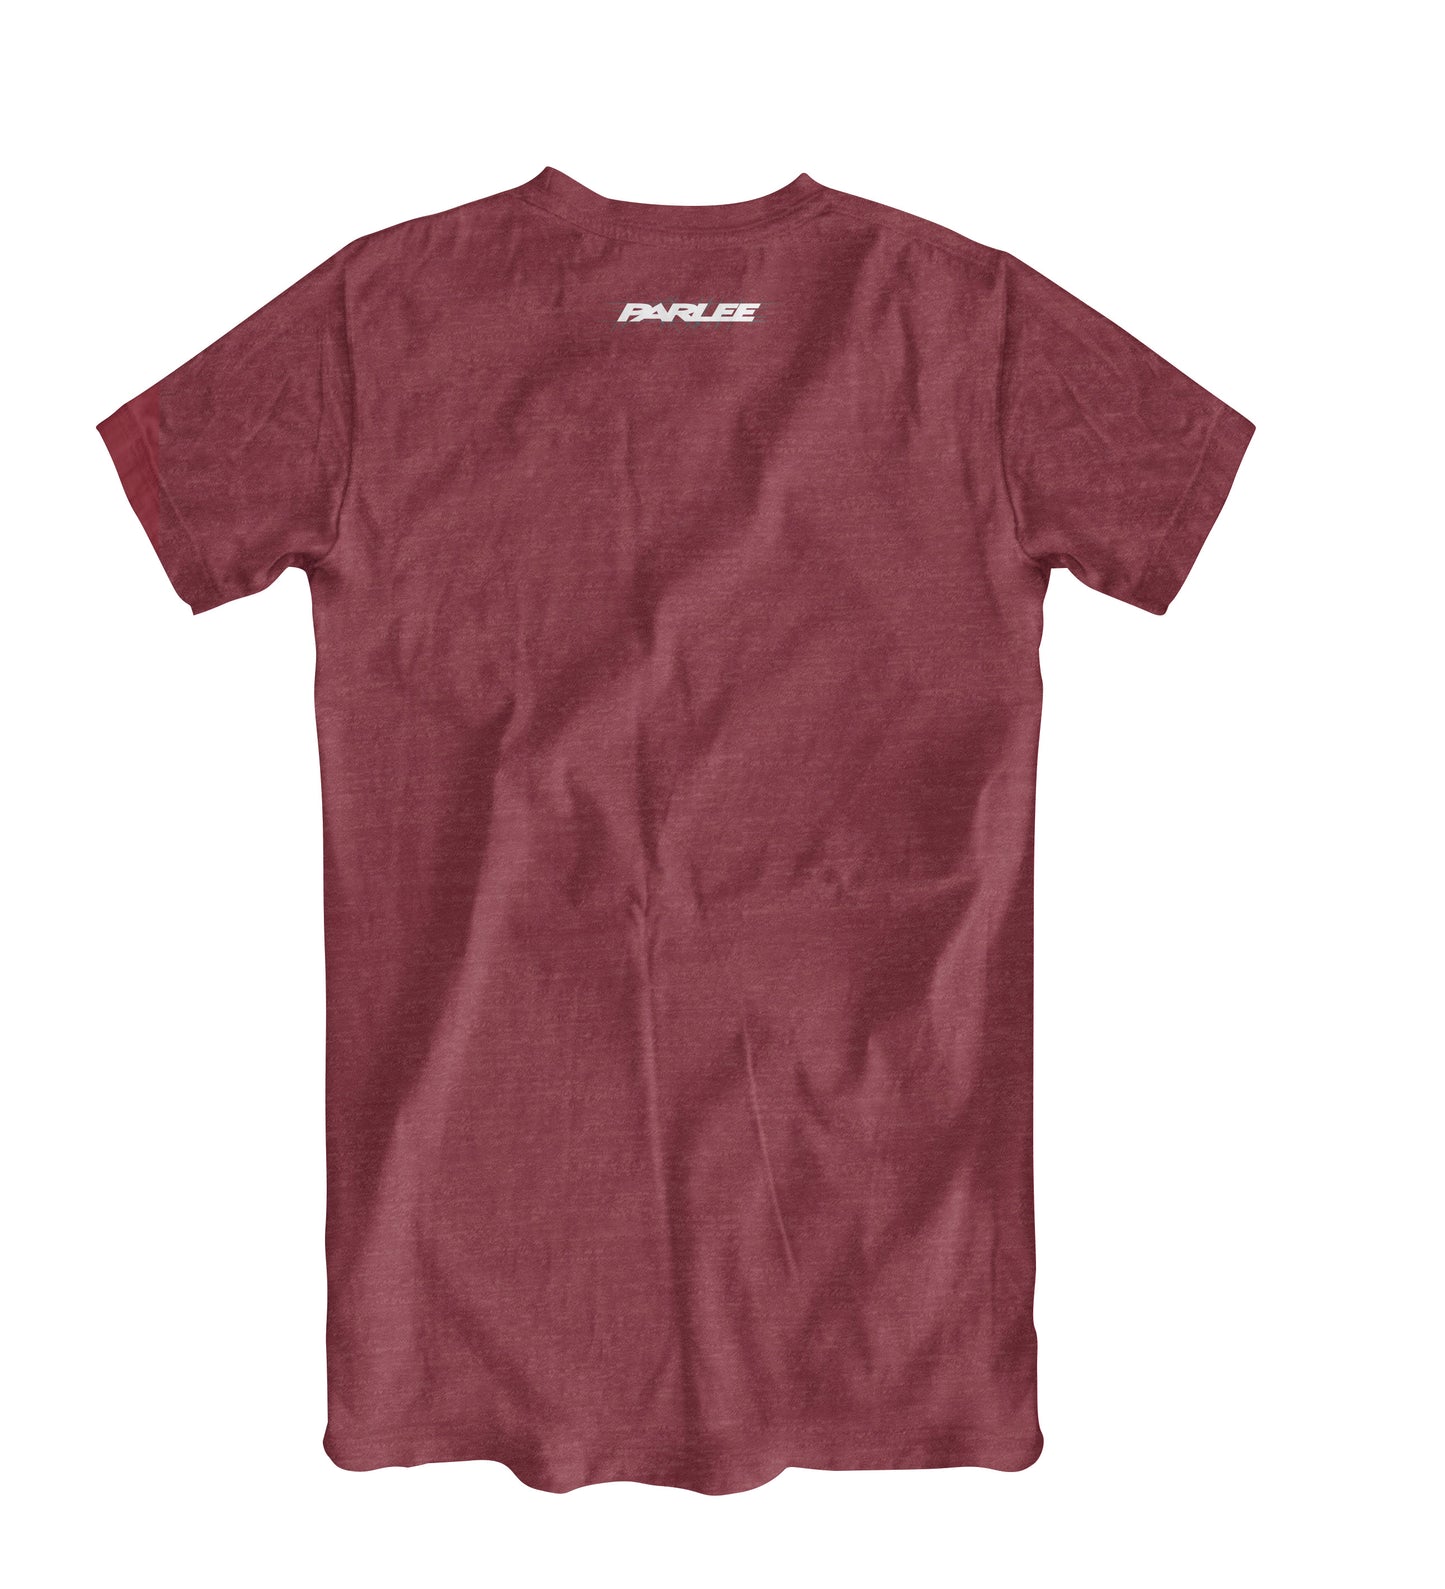 Chebacco T-Shirt, Cranberry